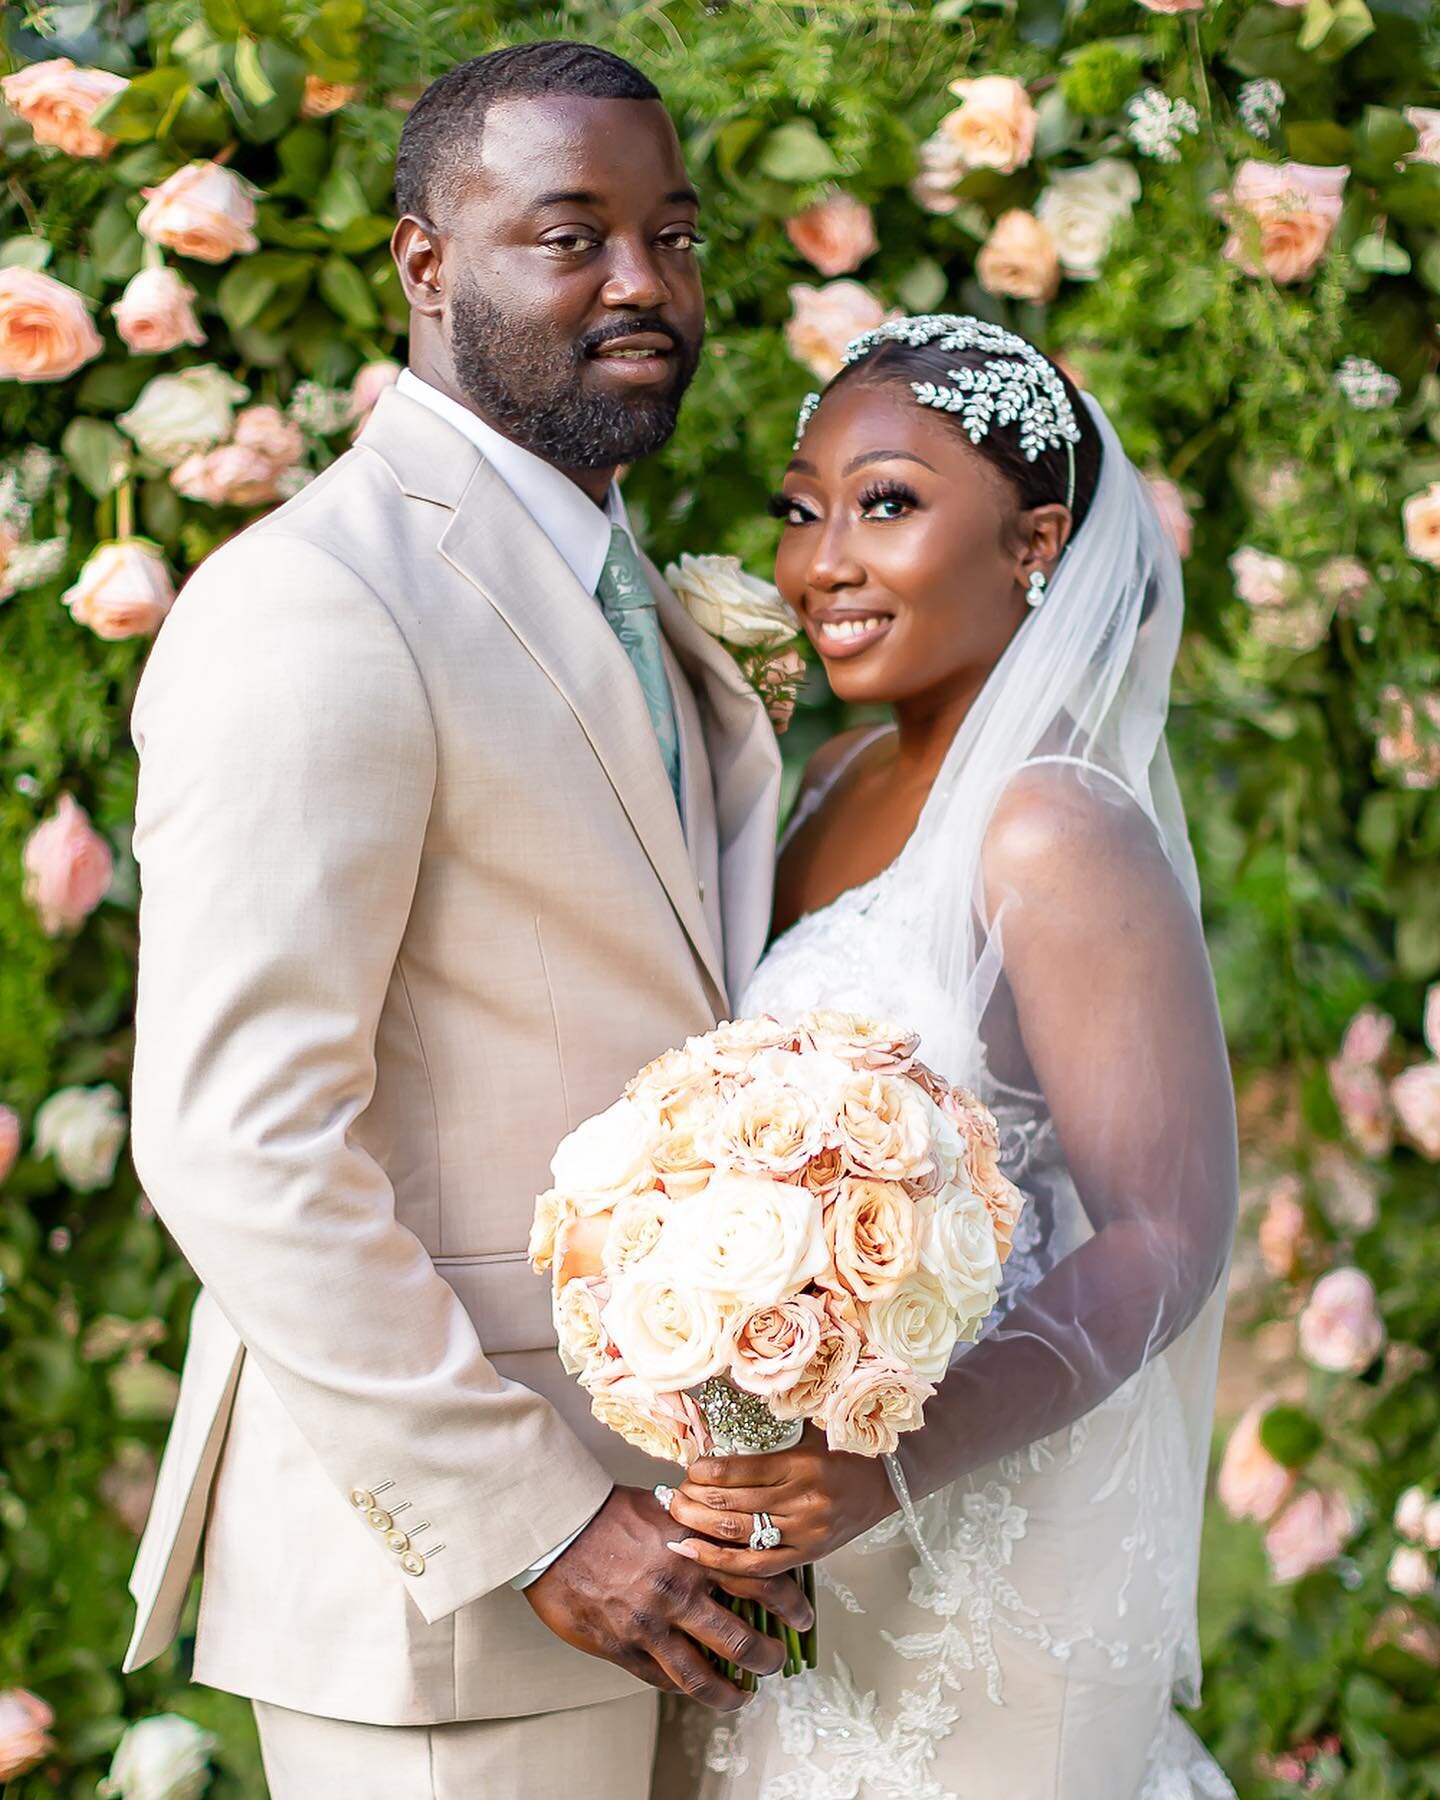 Jasmyn + Kerry

#mlphotography #weddingphotographer #alabamaphotographer #blackbrides #blacklove #love #newlyweds #bride #groom